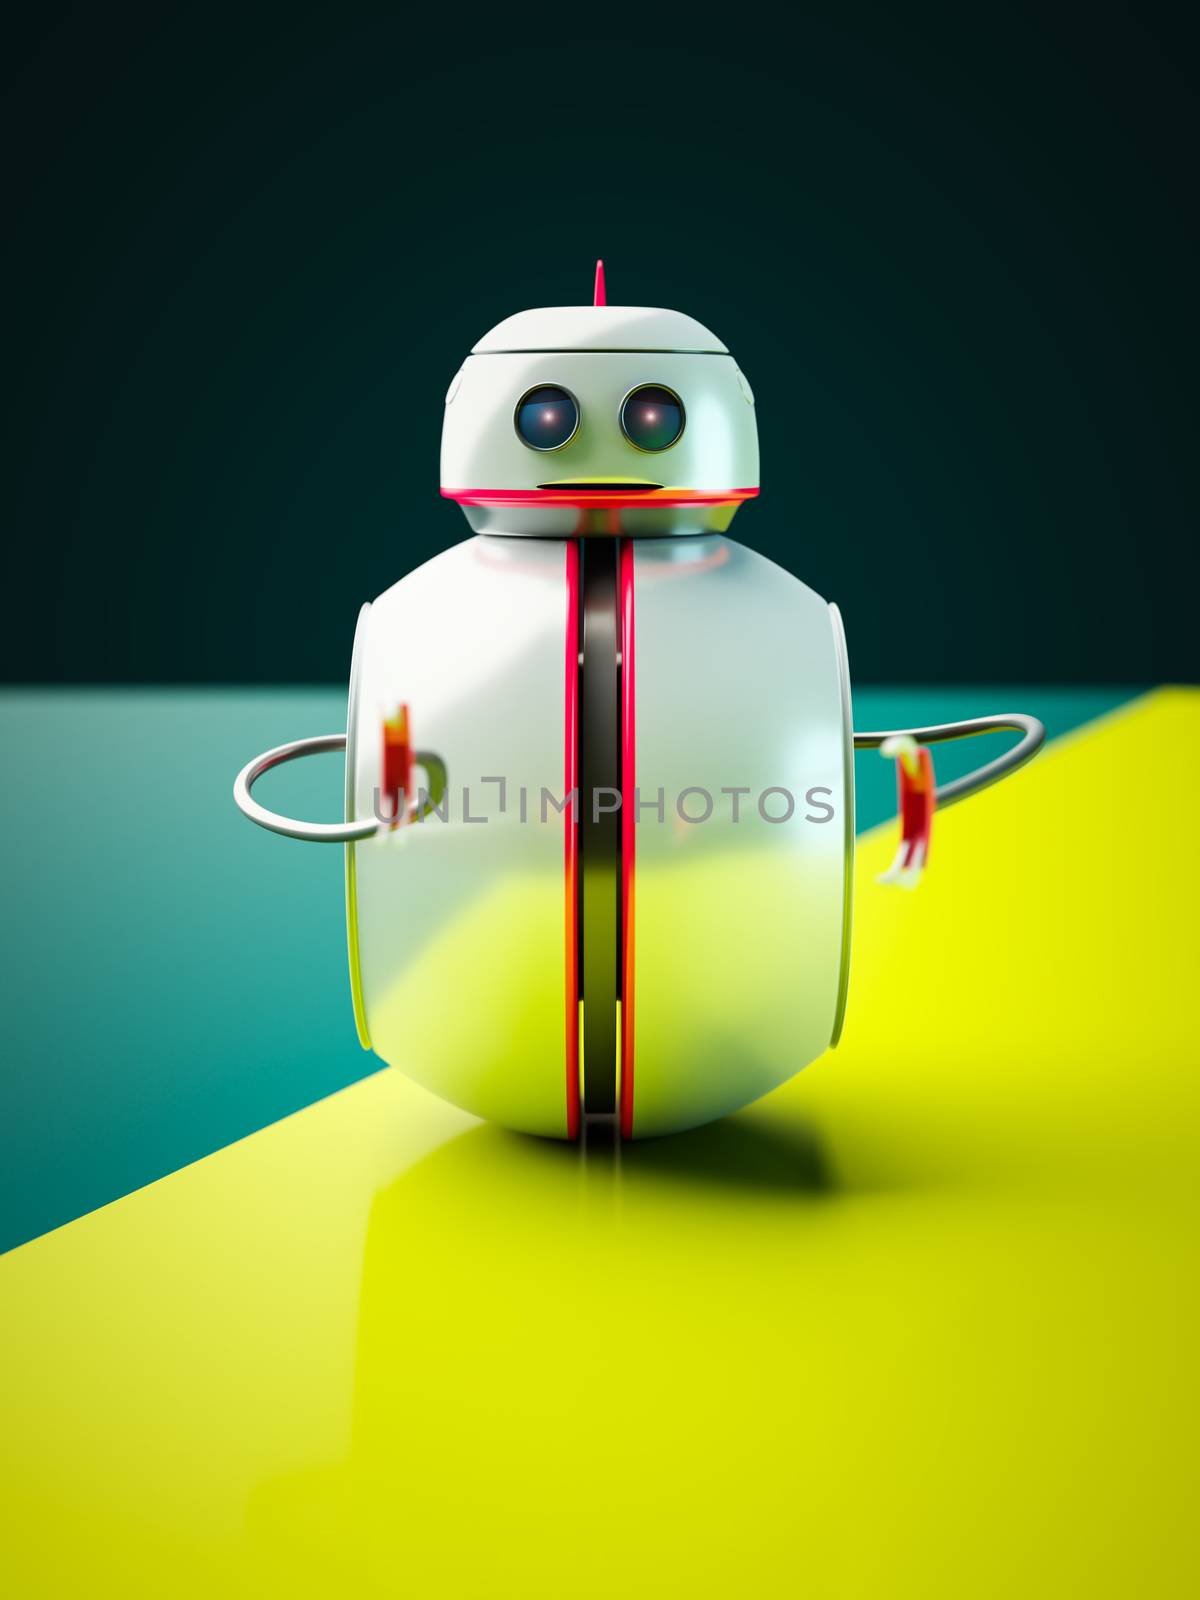 An image of a sweet little robot 3D illustration